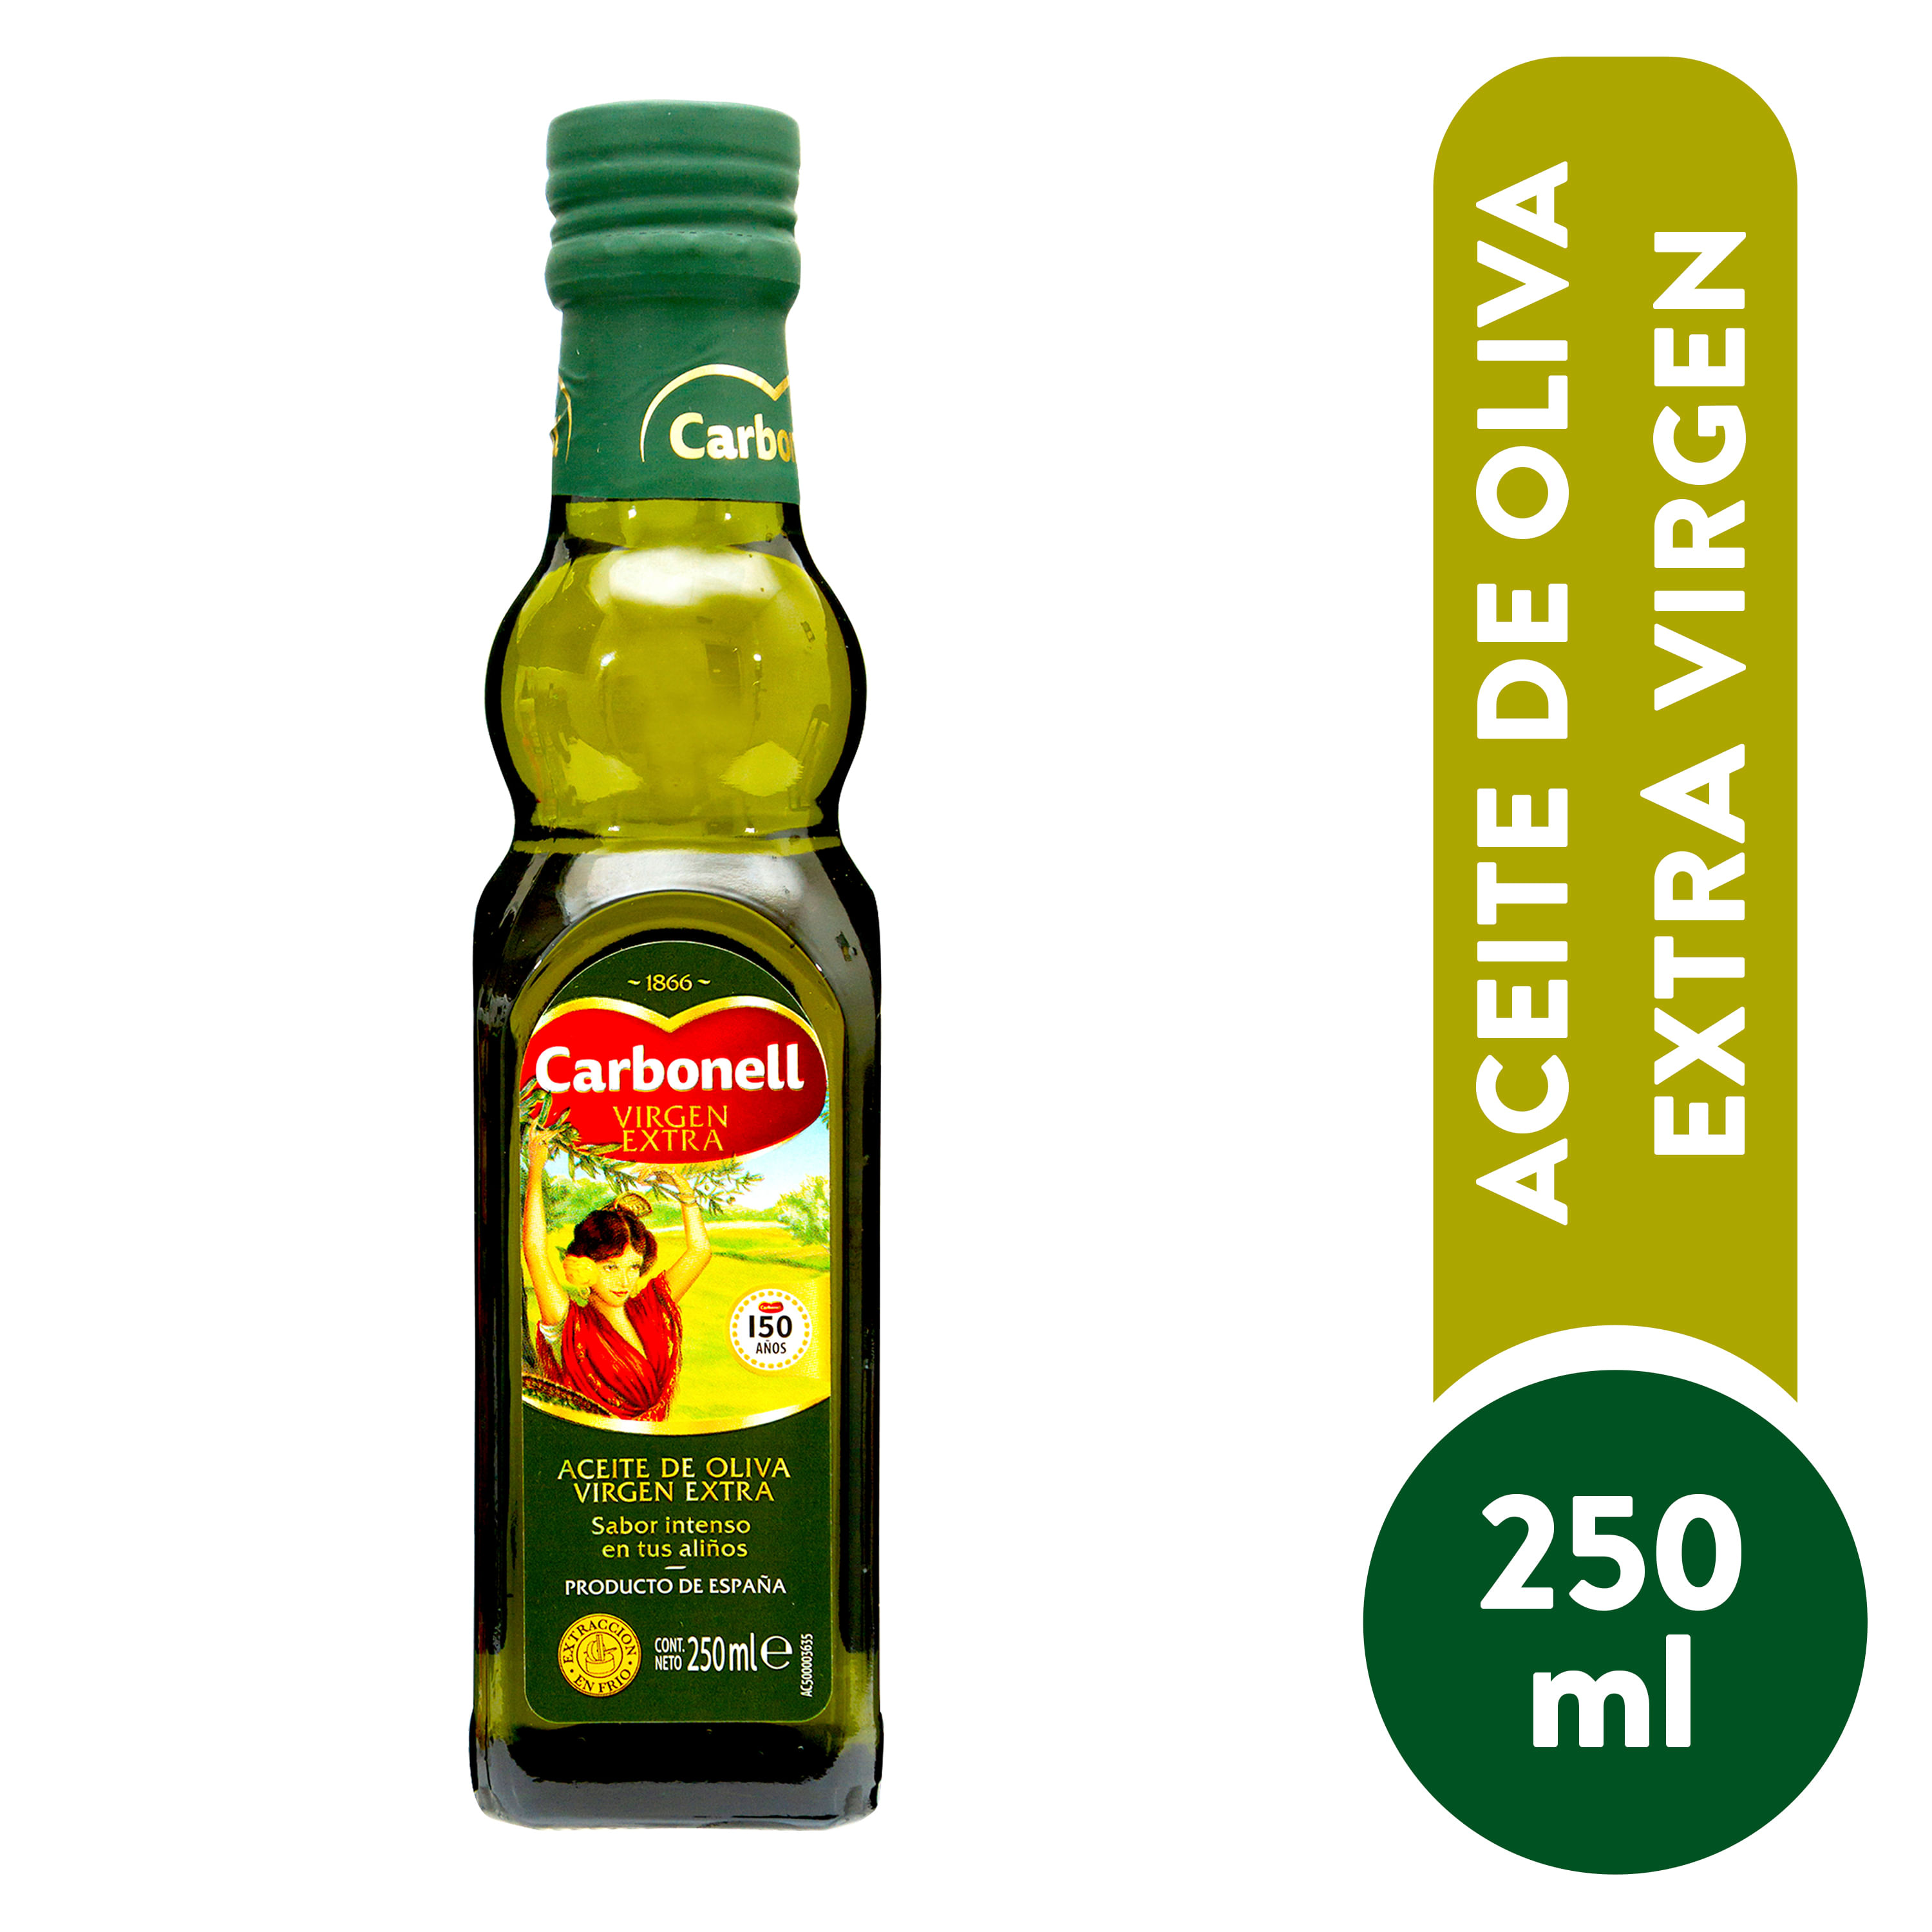 aceite de oliva virgen extra carbonell 750ml